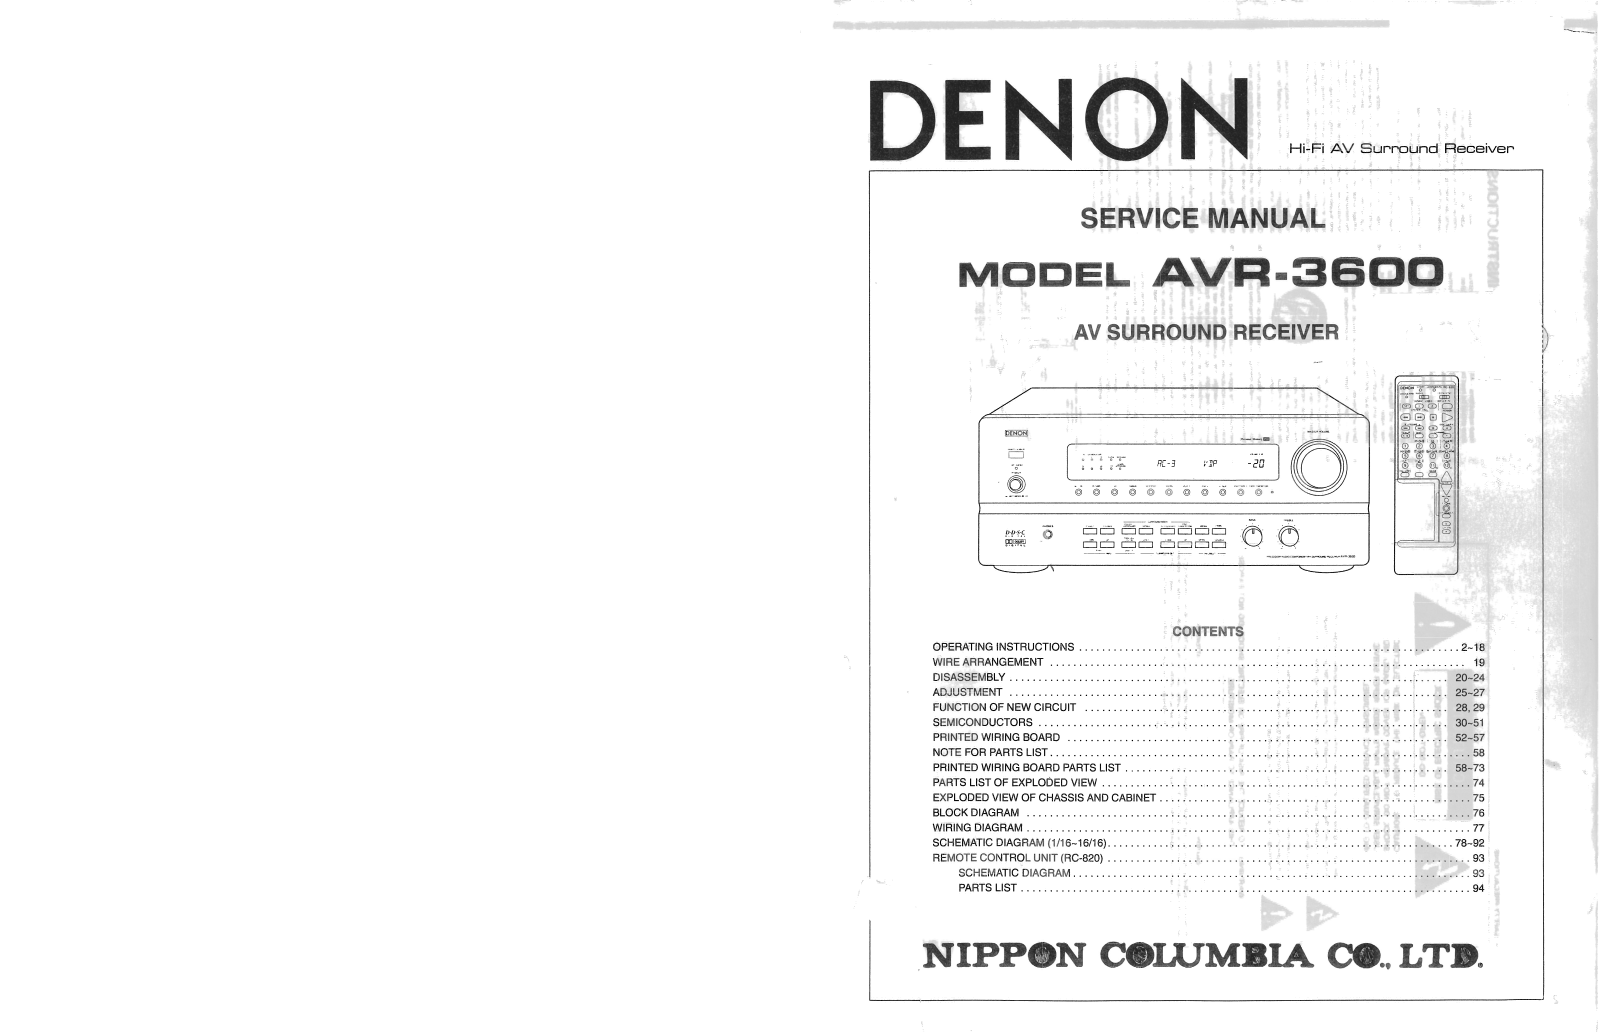 Denon AVR-3600 Service Manual